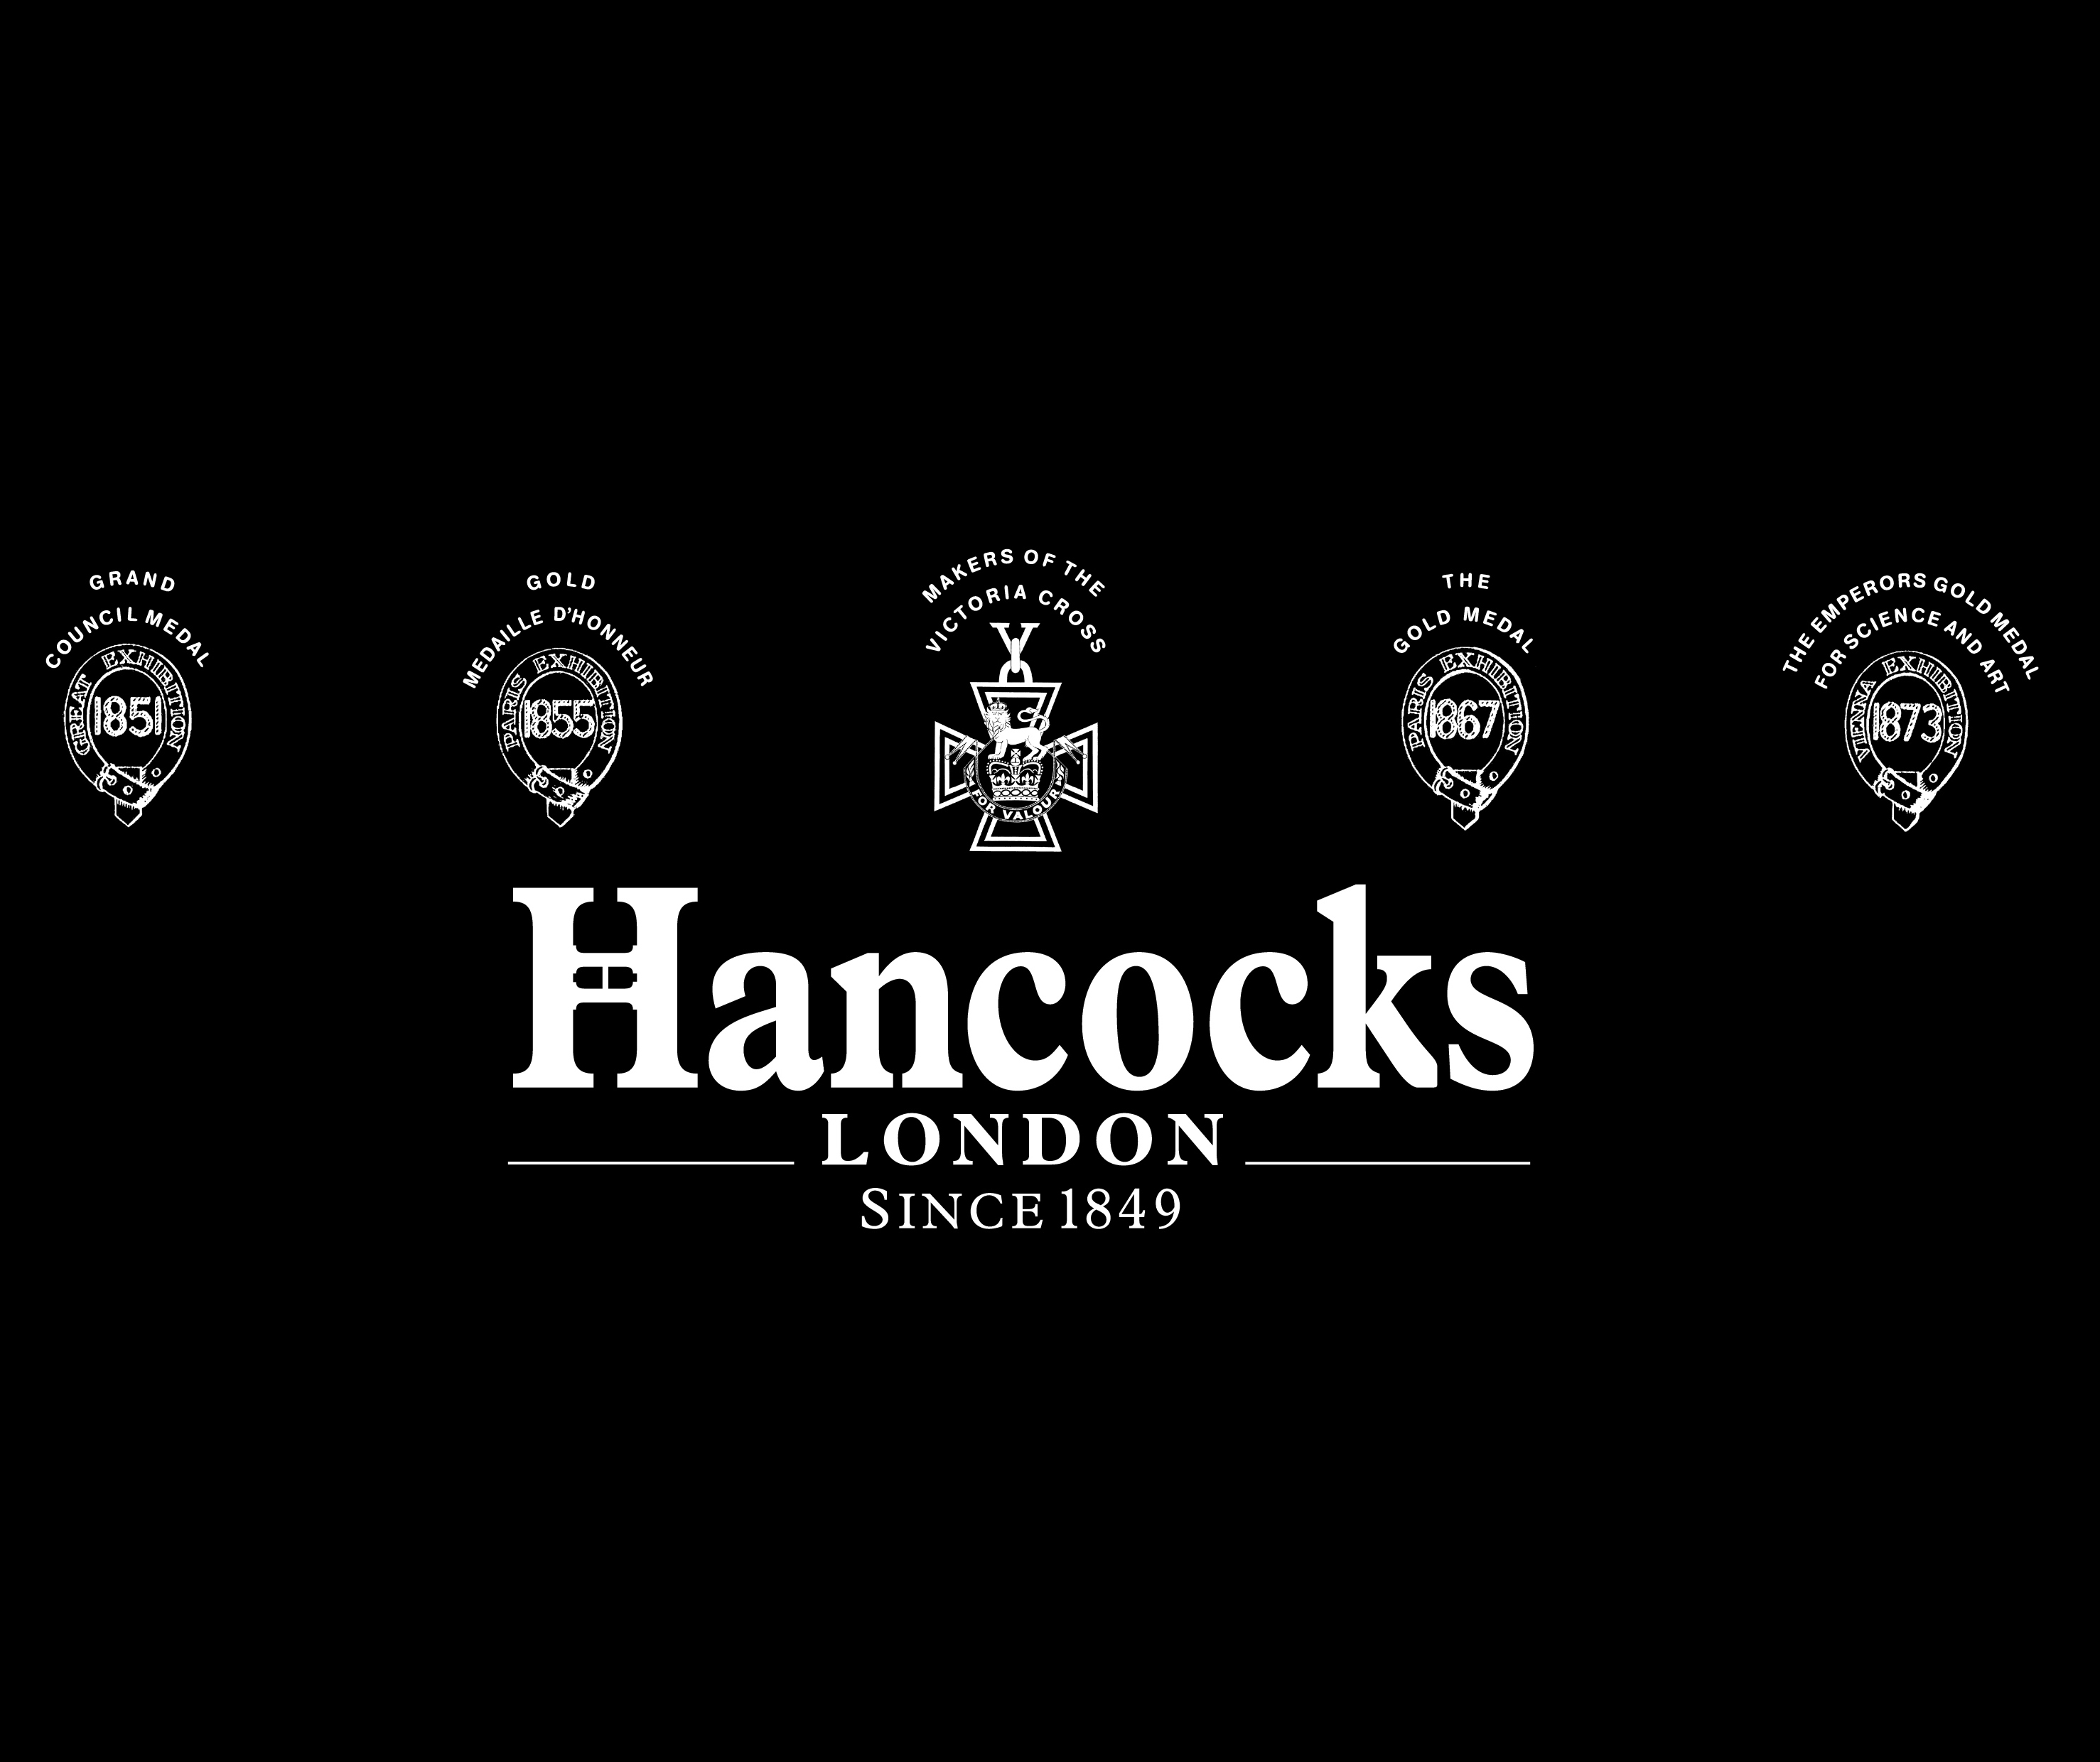 Hancocks